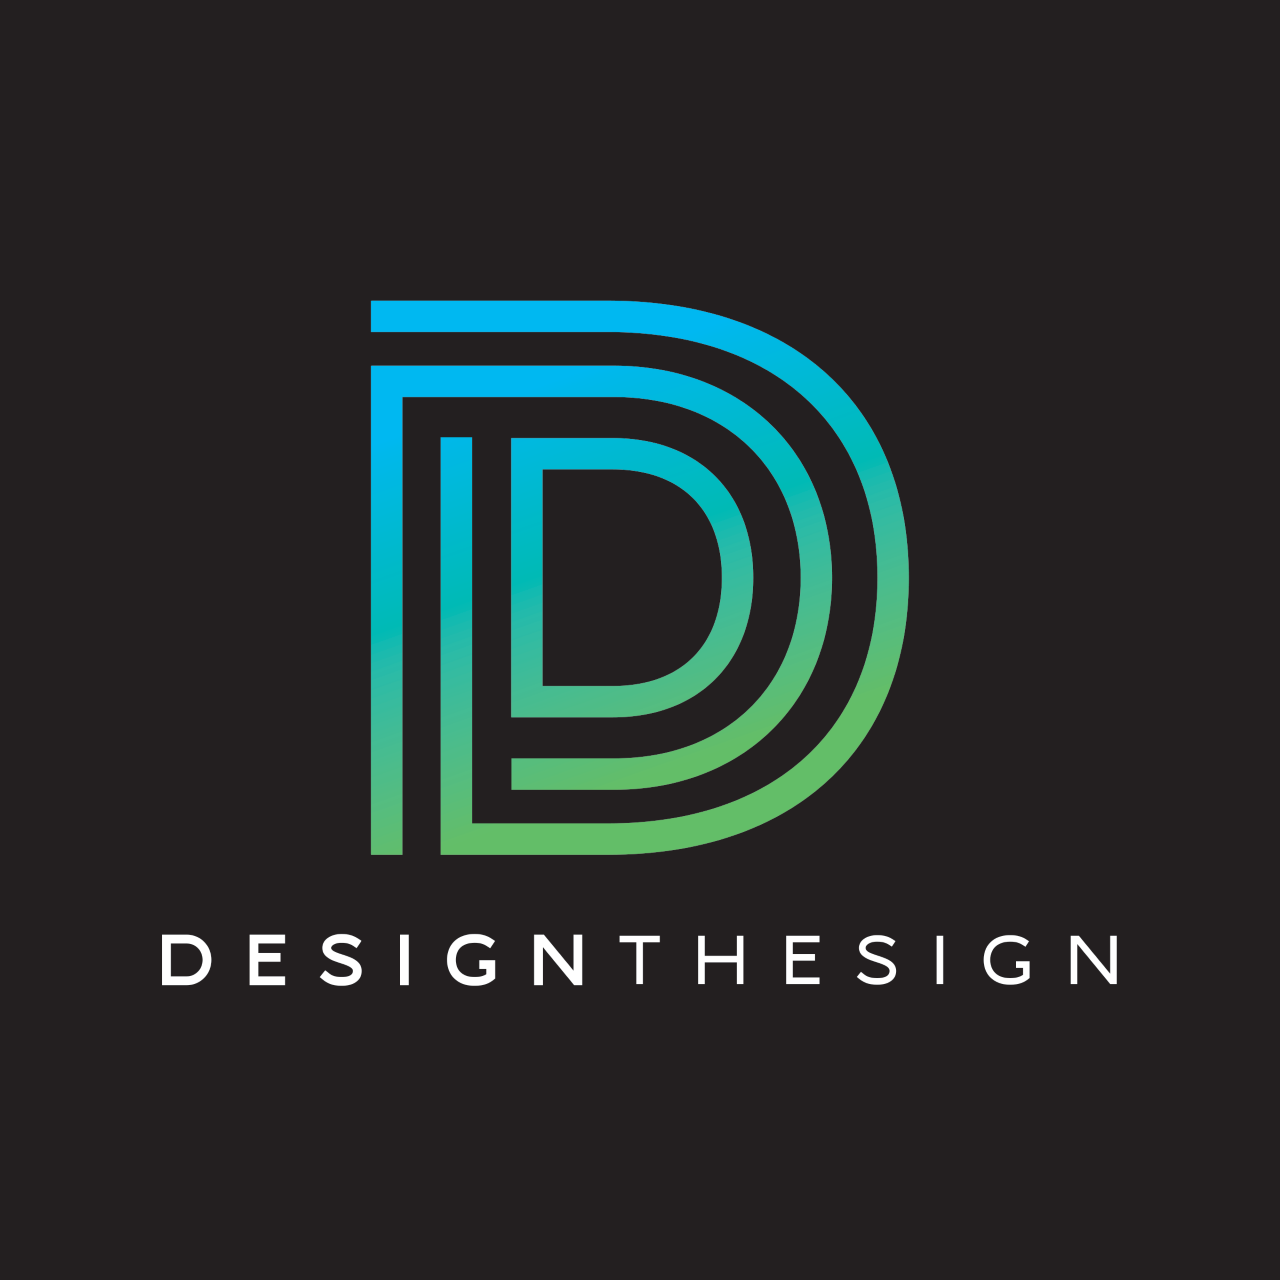 Design The Sign Logo